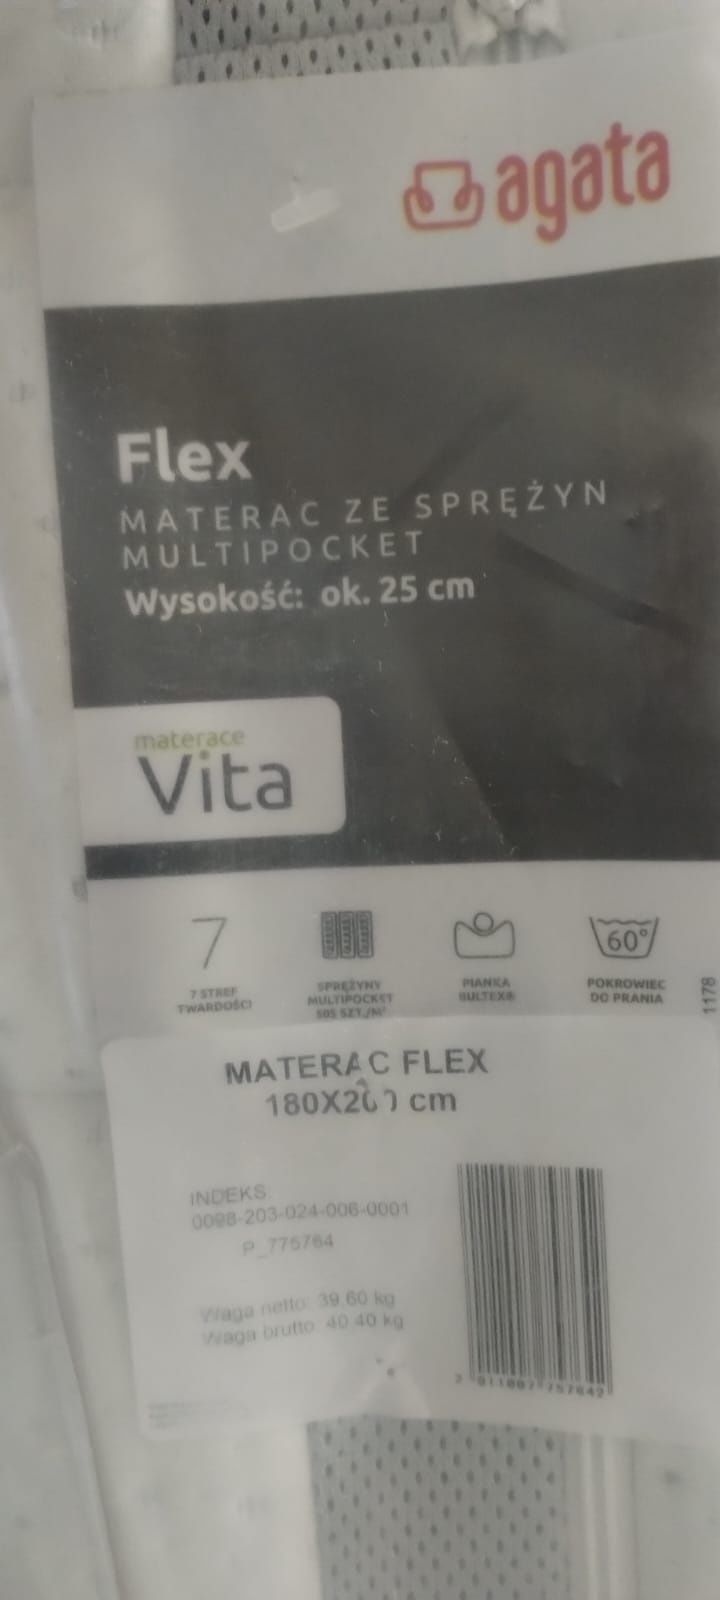 Materac Vita  Flex ze sprężyn multipocket 180x200 NOWY